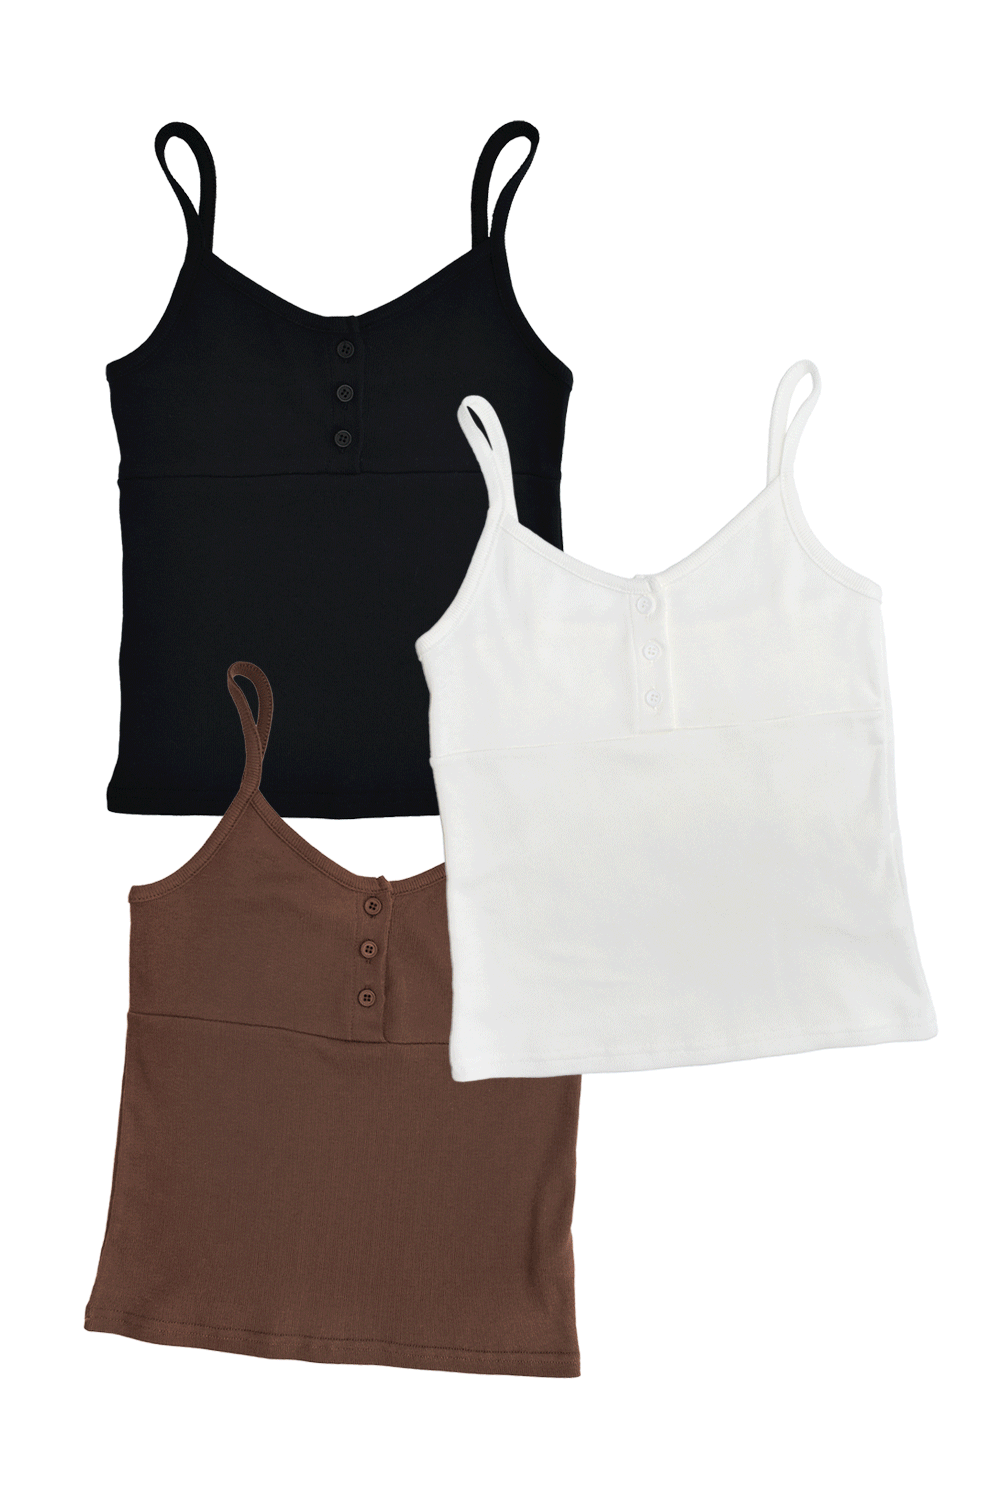 maru button sleeveless top (3colors)